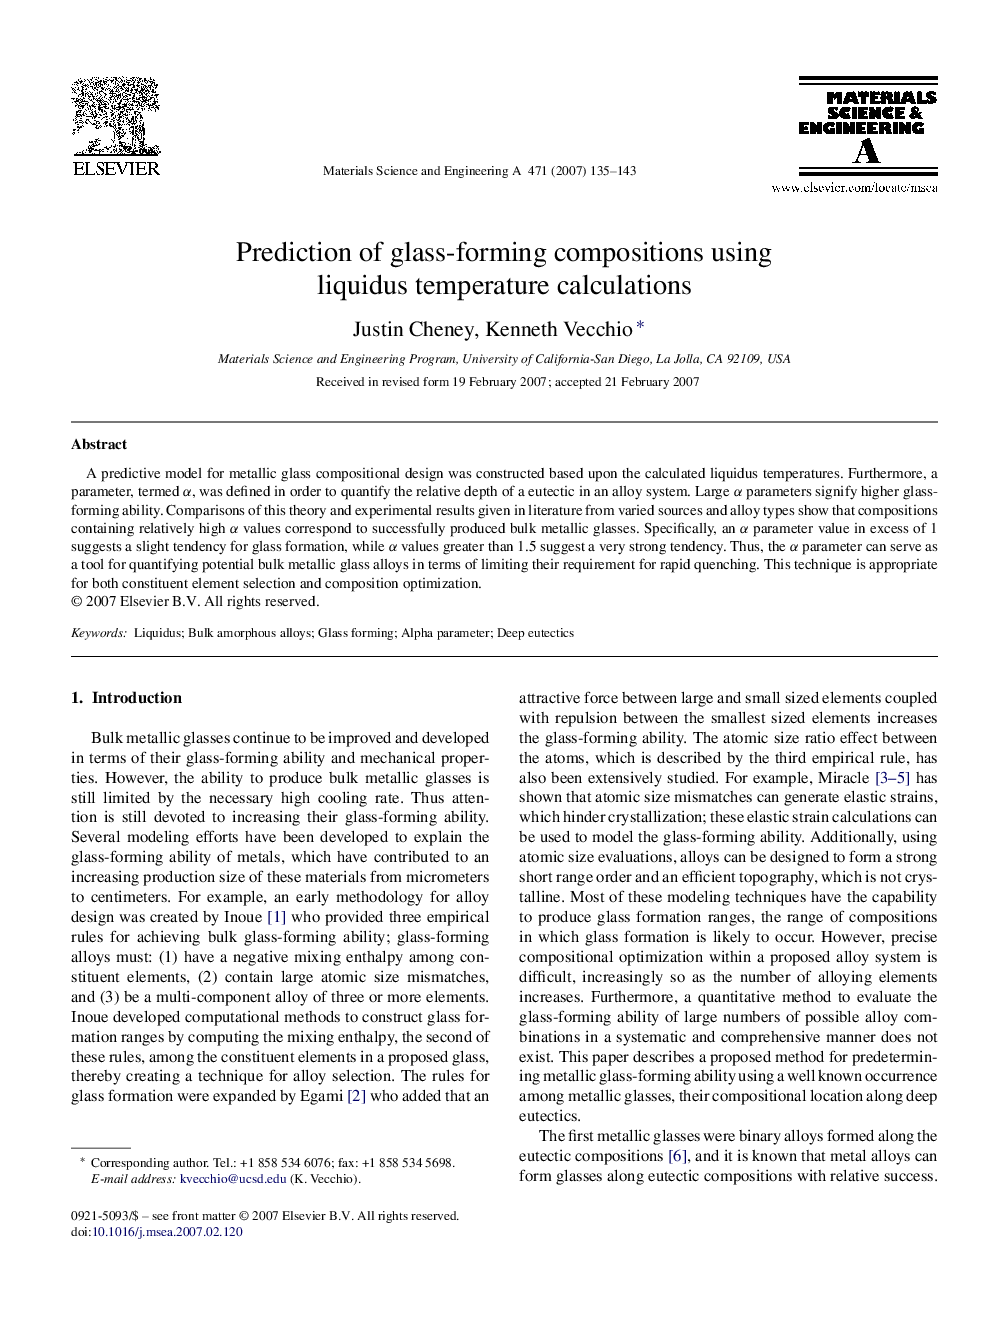 Prediction of glass-forming compositions using liquidus temperature calculations